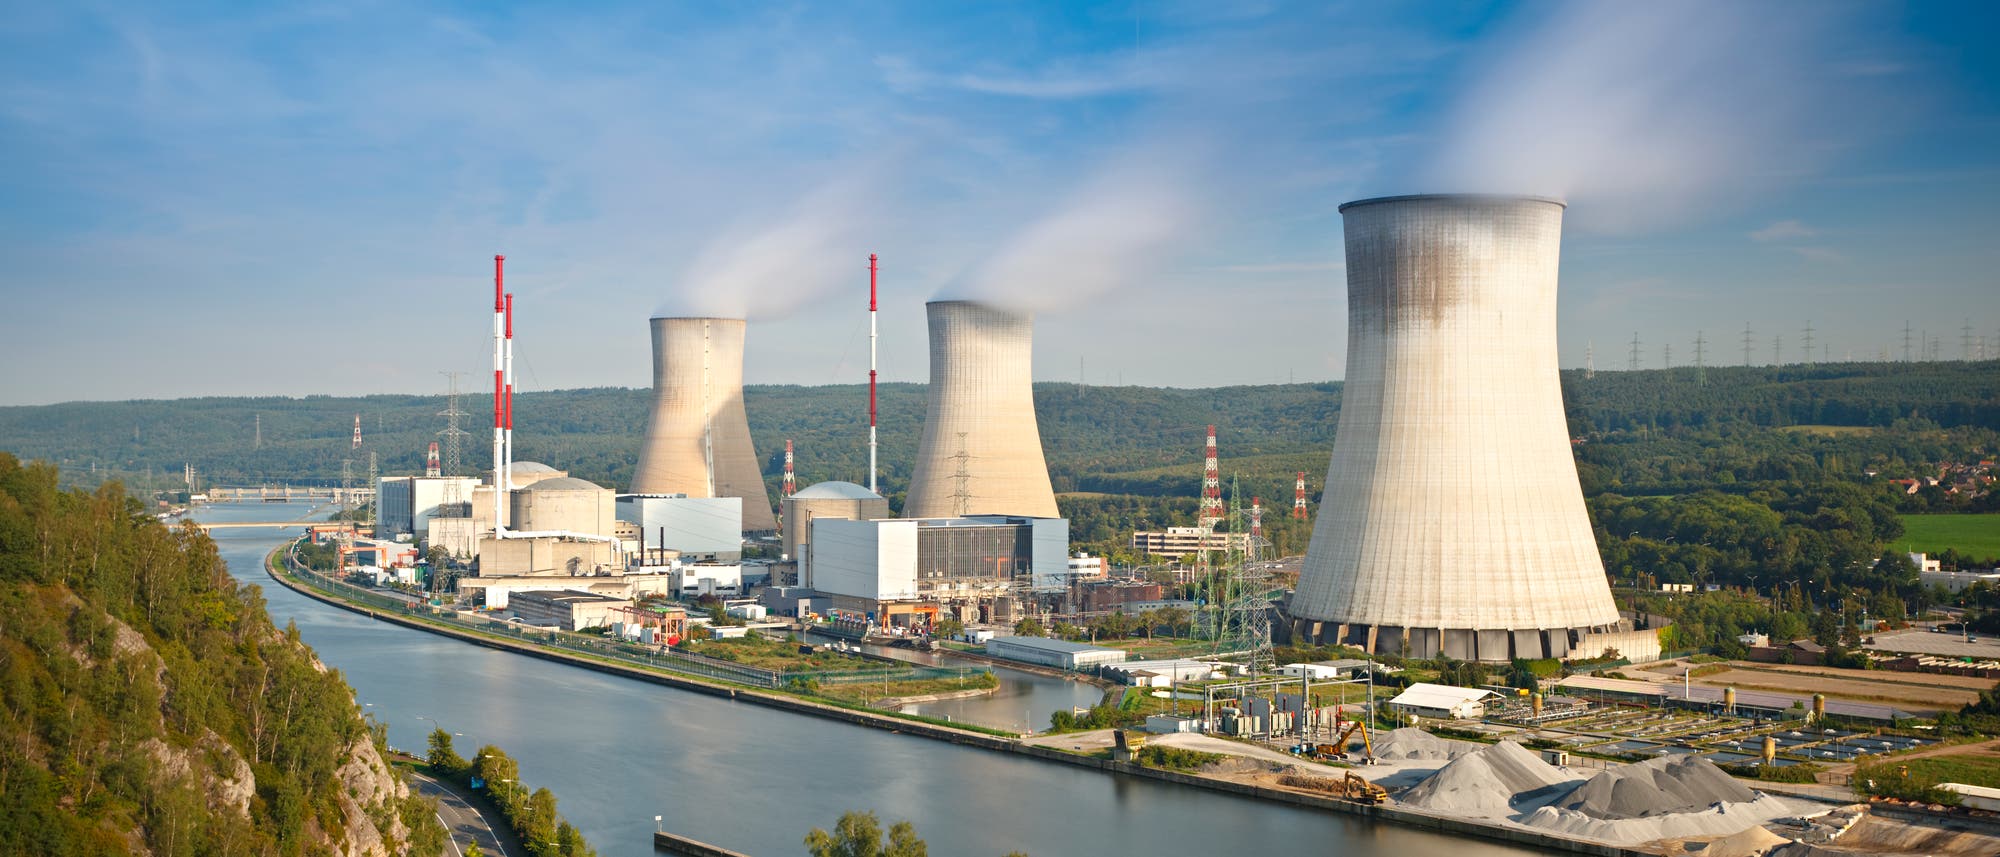 Das Kernkraftwerk Tihange in Belgien